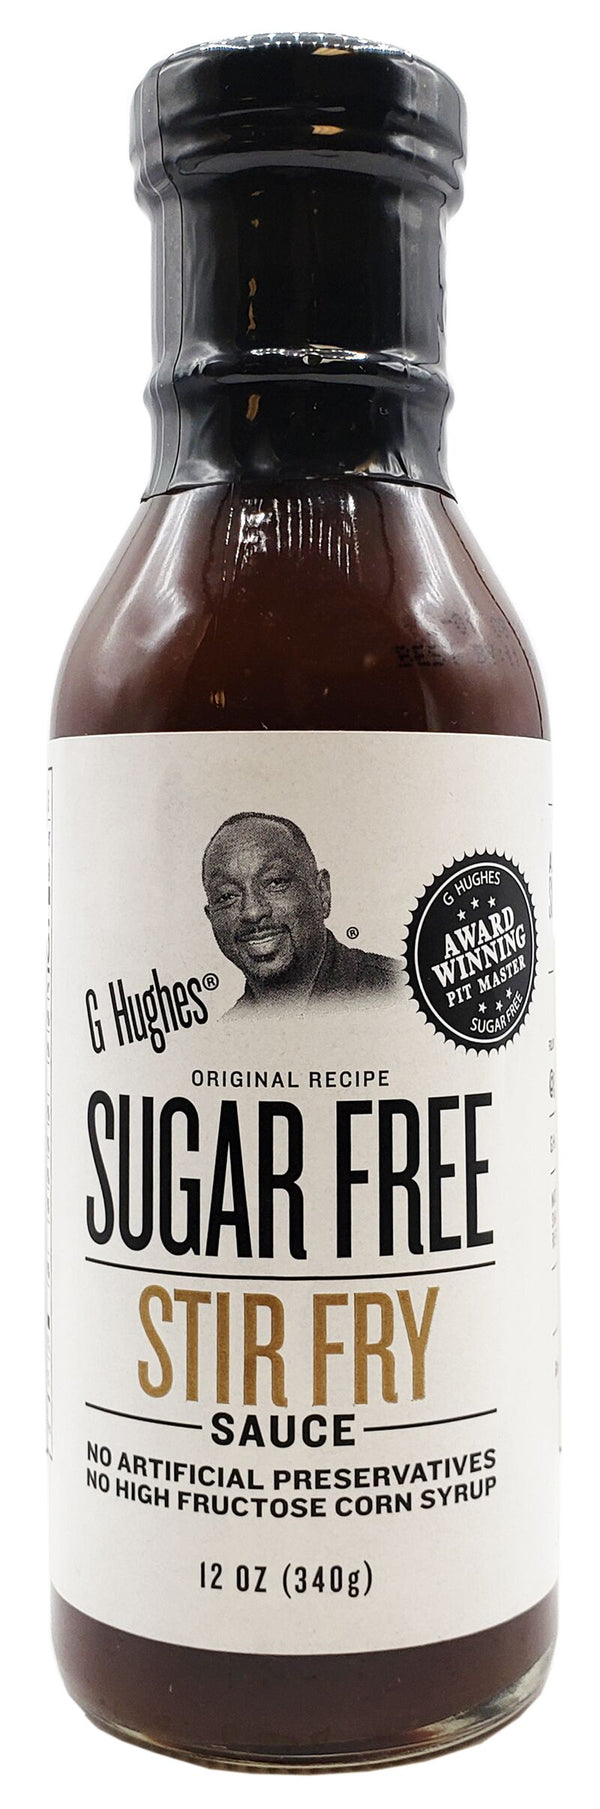 G. Hughes Smokehouse Sugar Free Stir Fry Sauce (12 oz) - High-quality Gluten Free by G Hughes at 